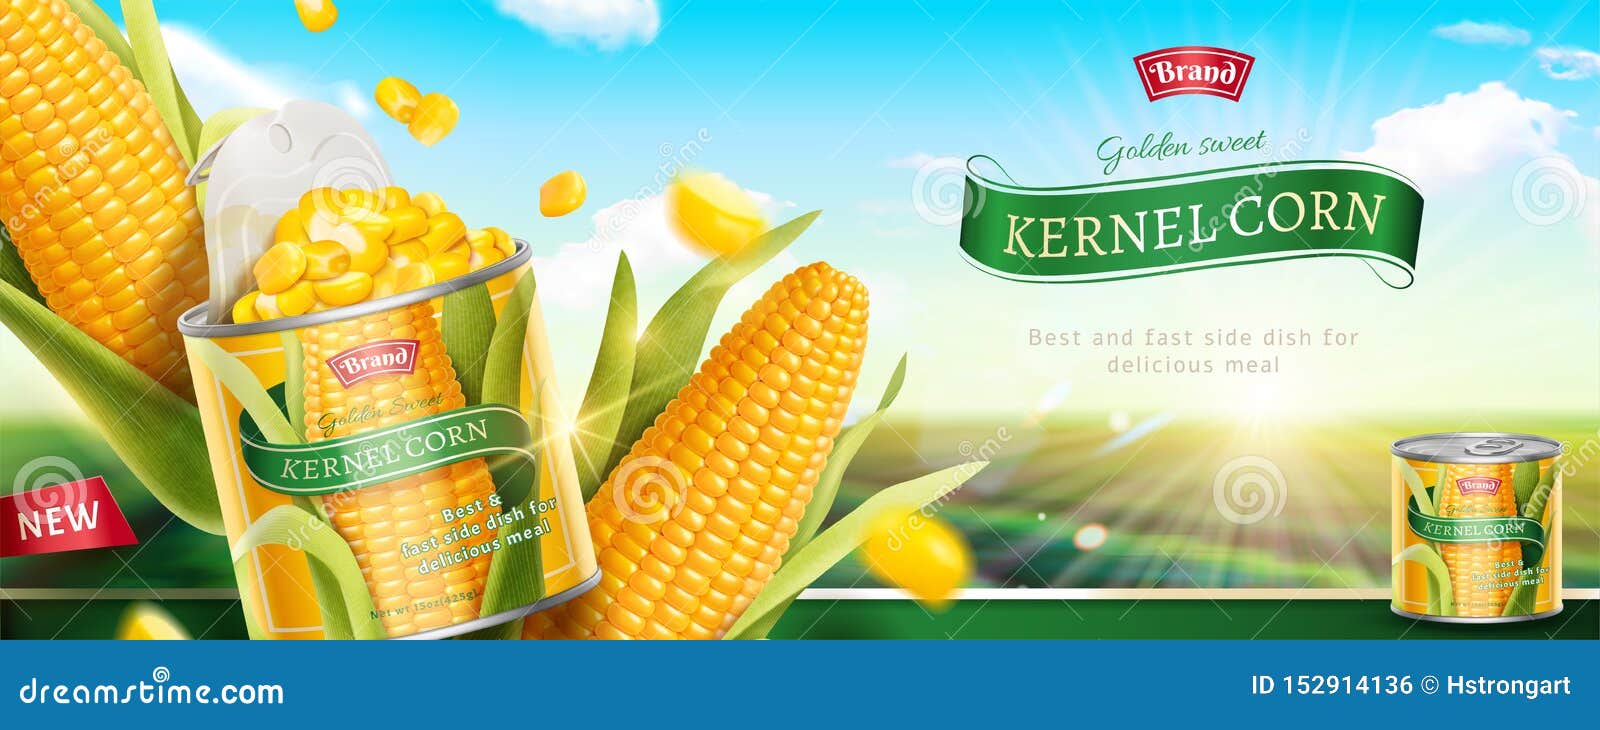 premium kernel corn can banner